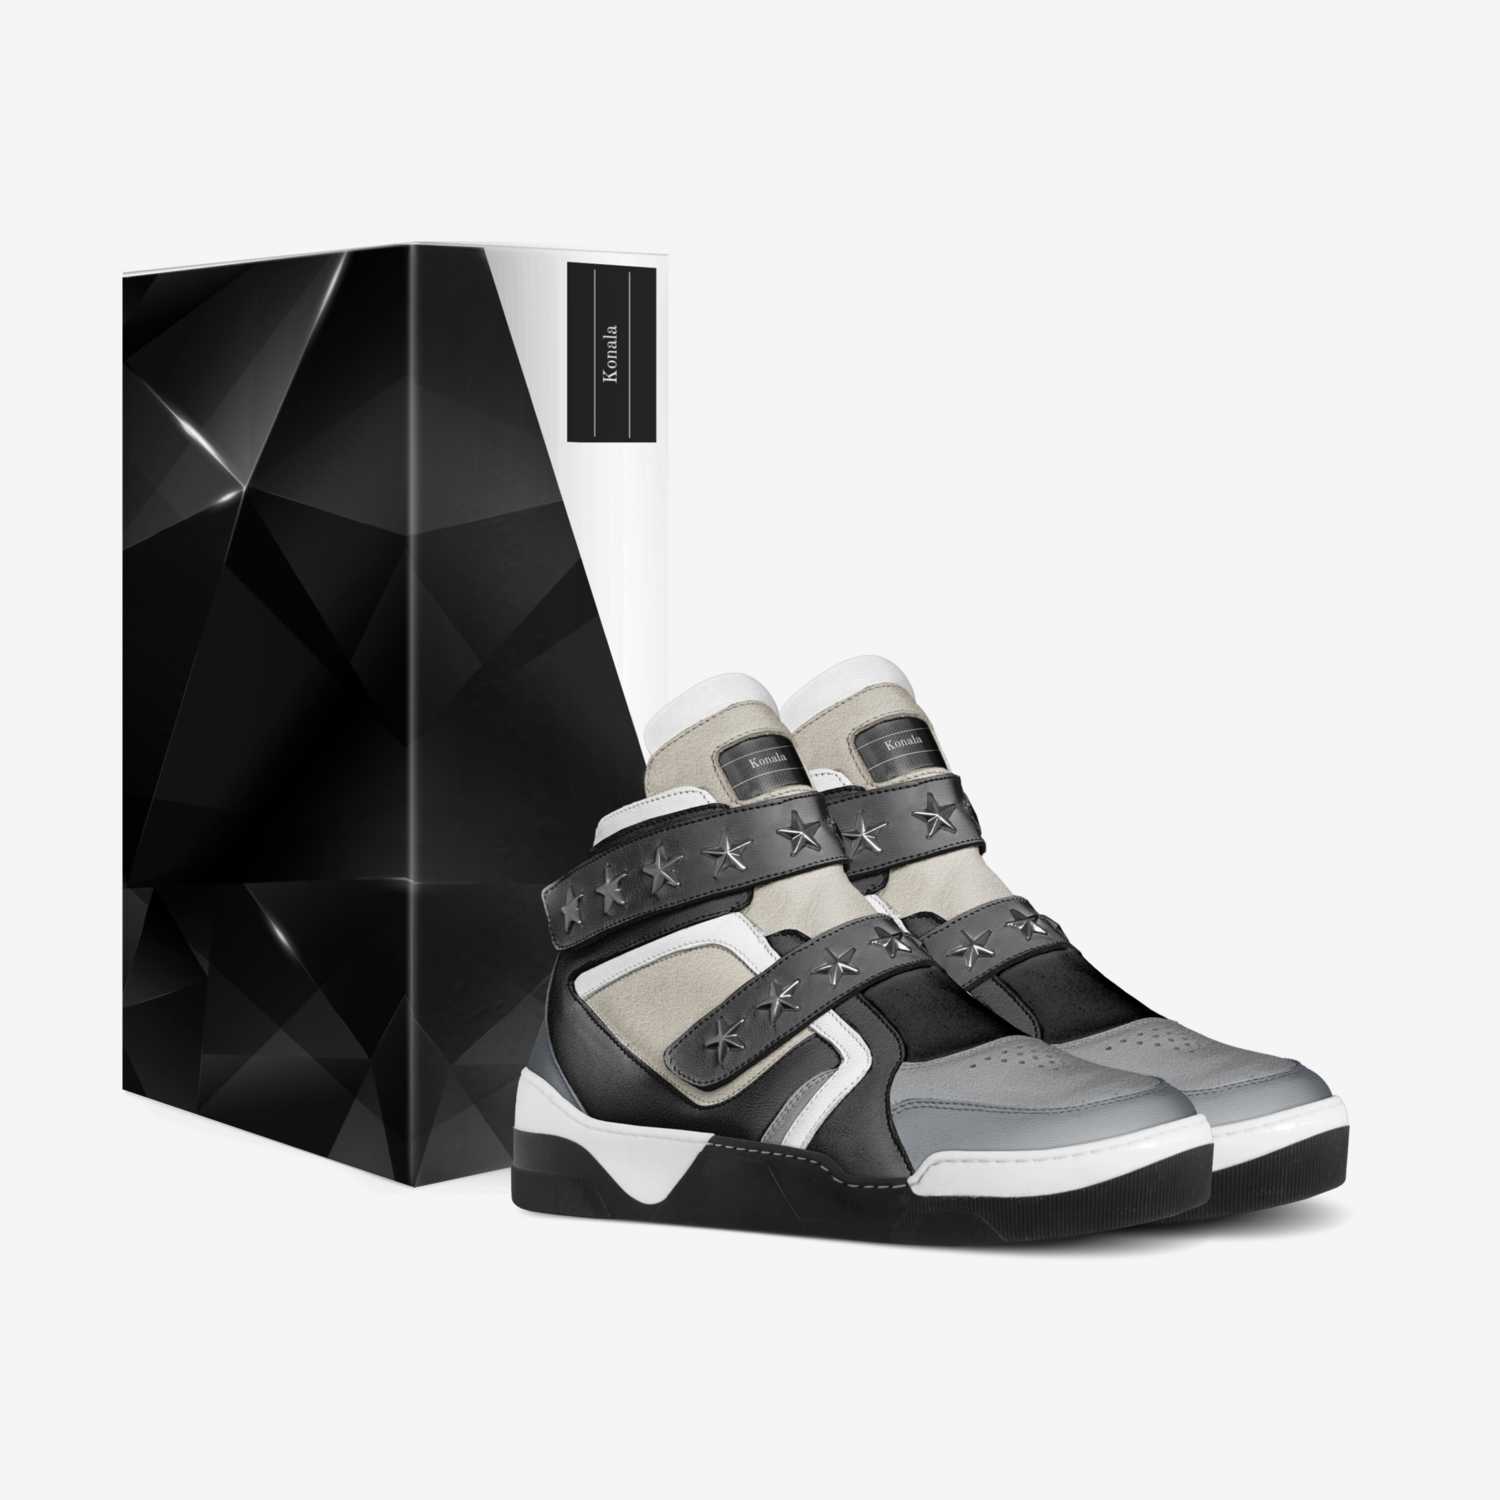 Konala custom made in Italy shoes by Tyrone Martin | Box view